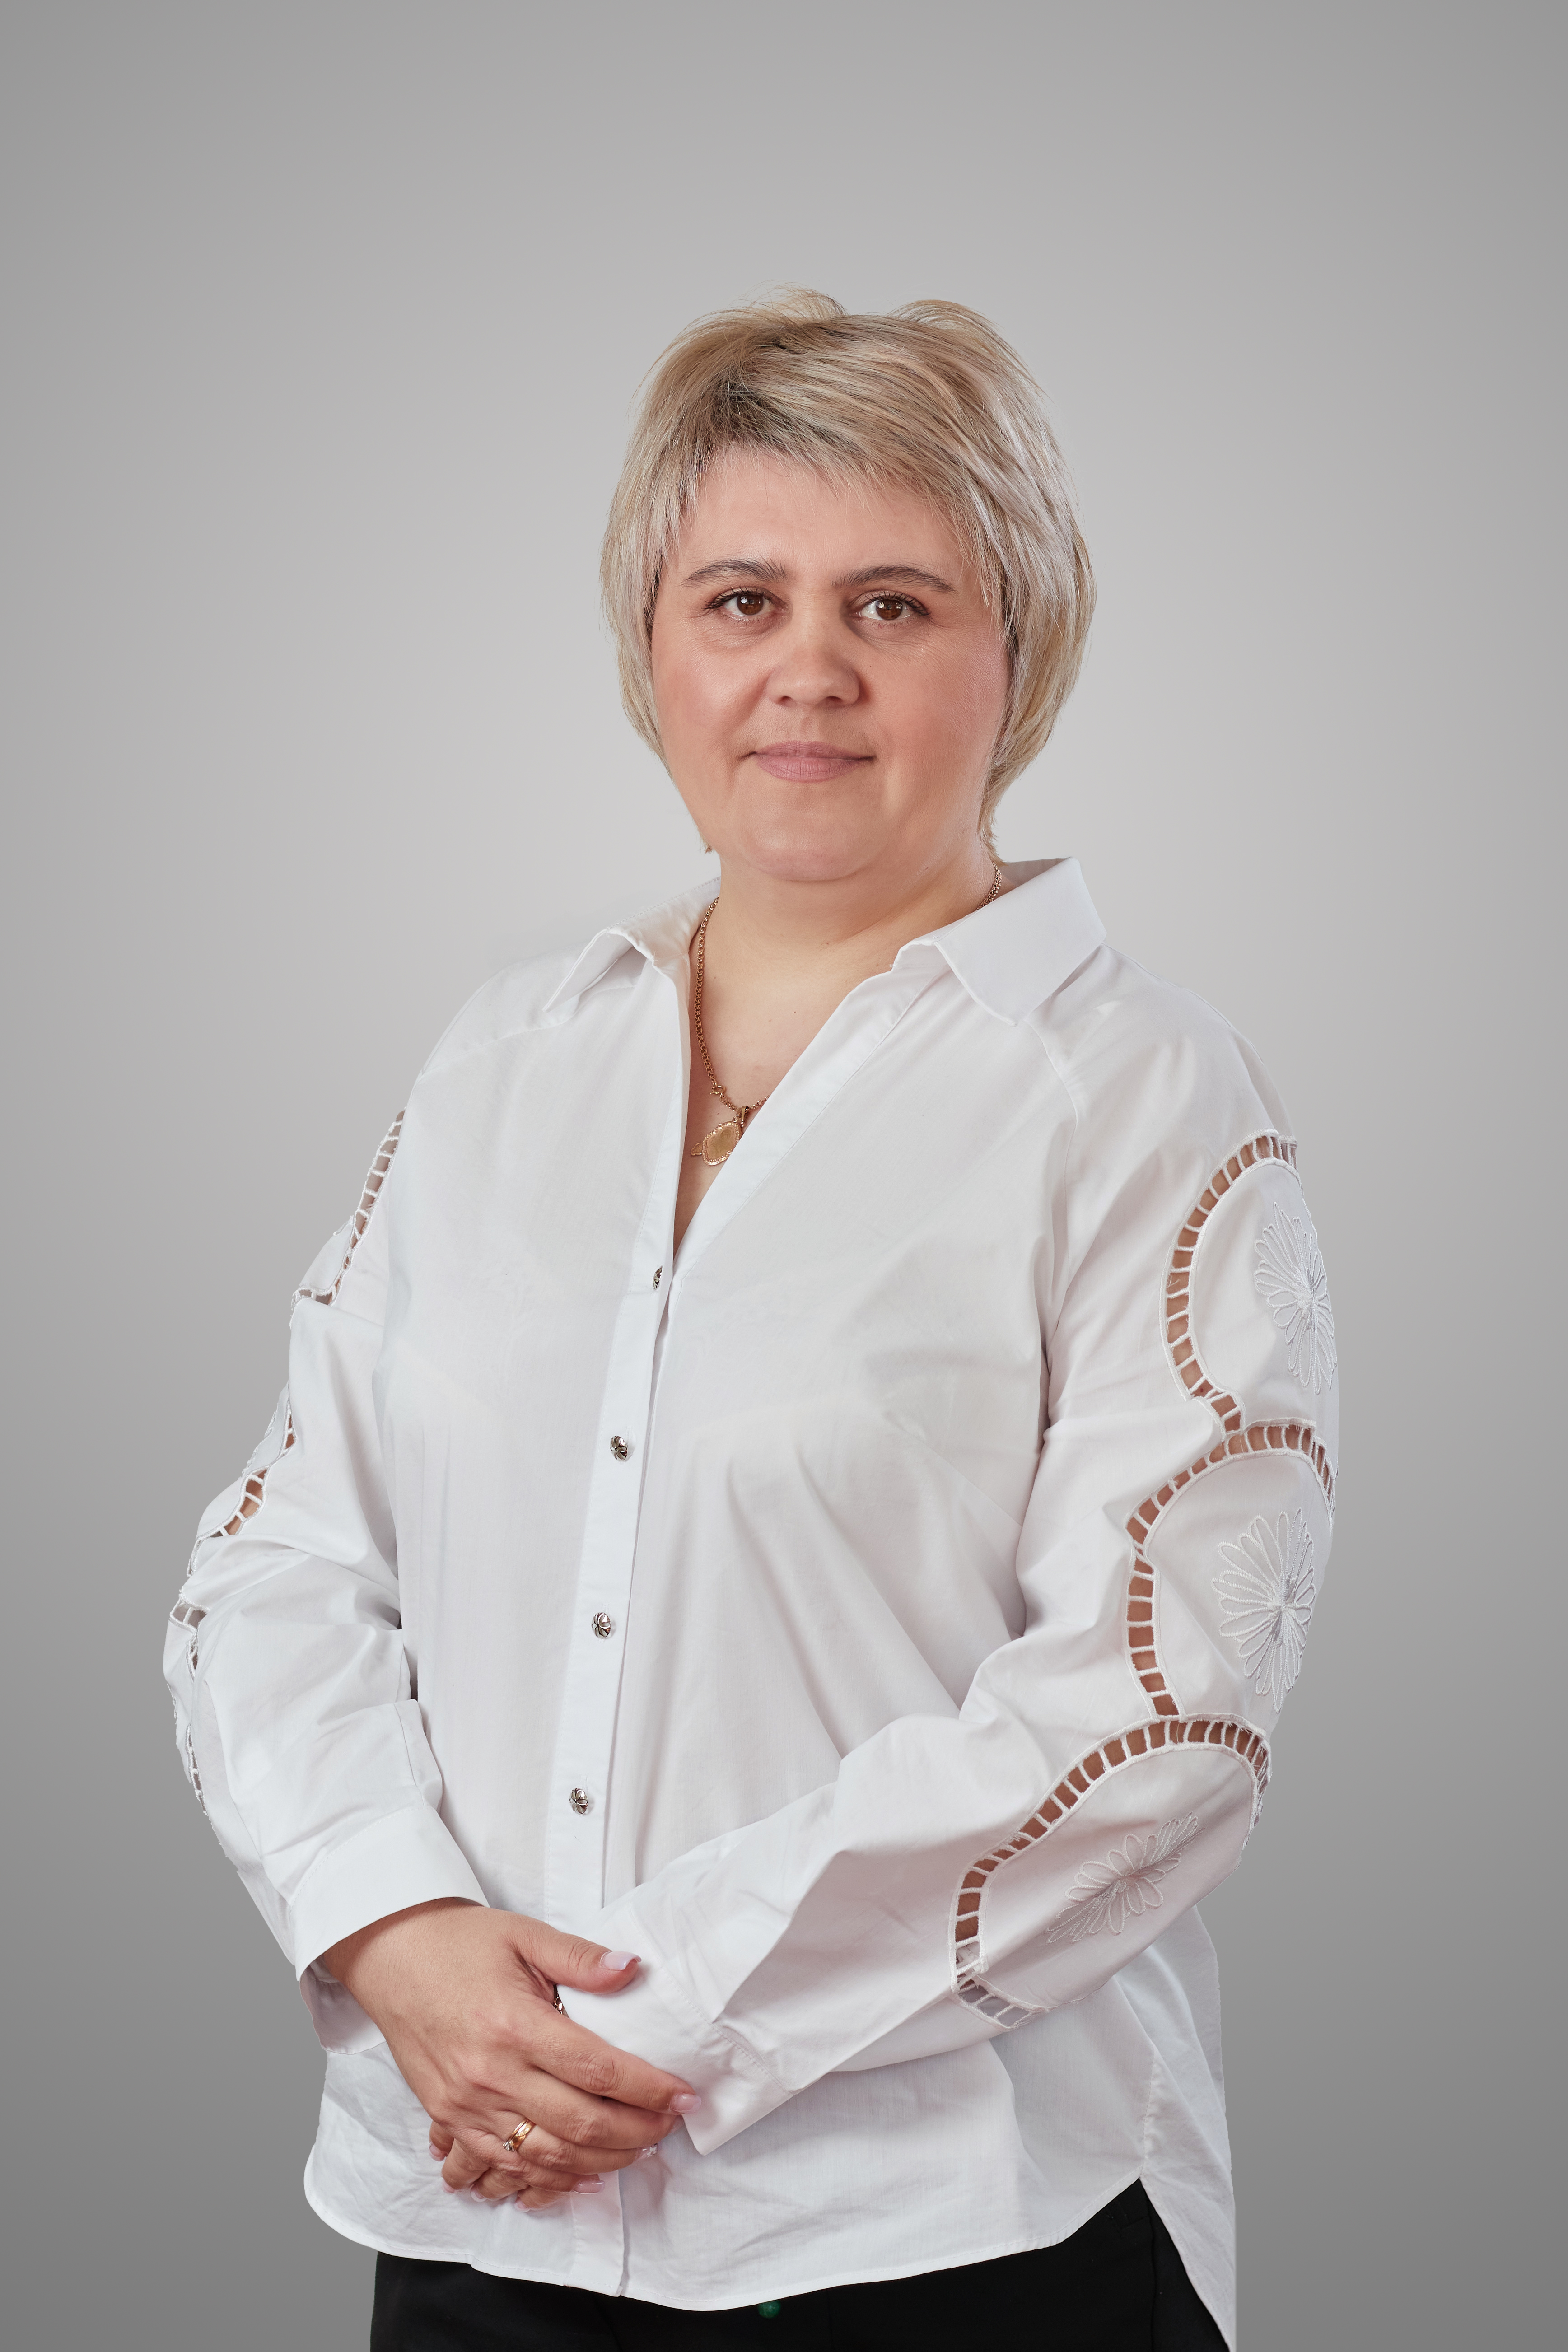 Щербинина Екатерина Александровна.